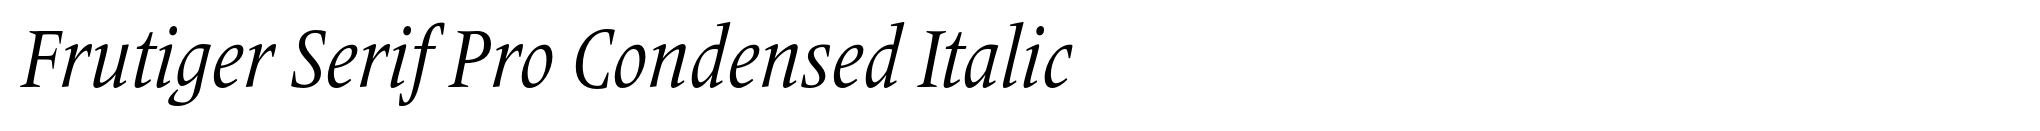 Frutiger Serif Pro Condensed Italic image